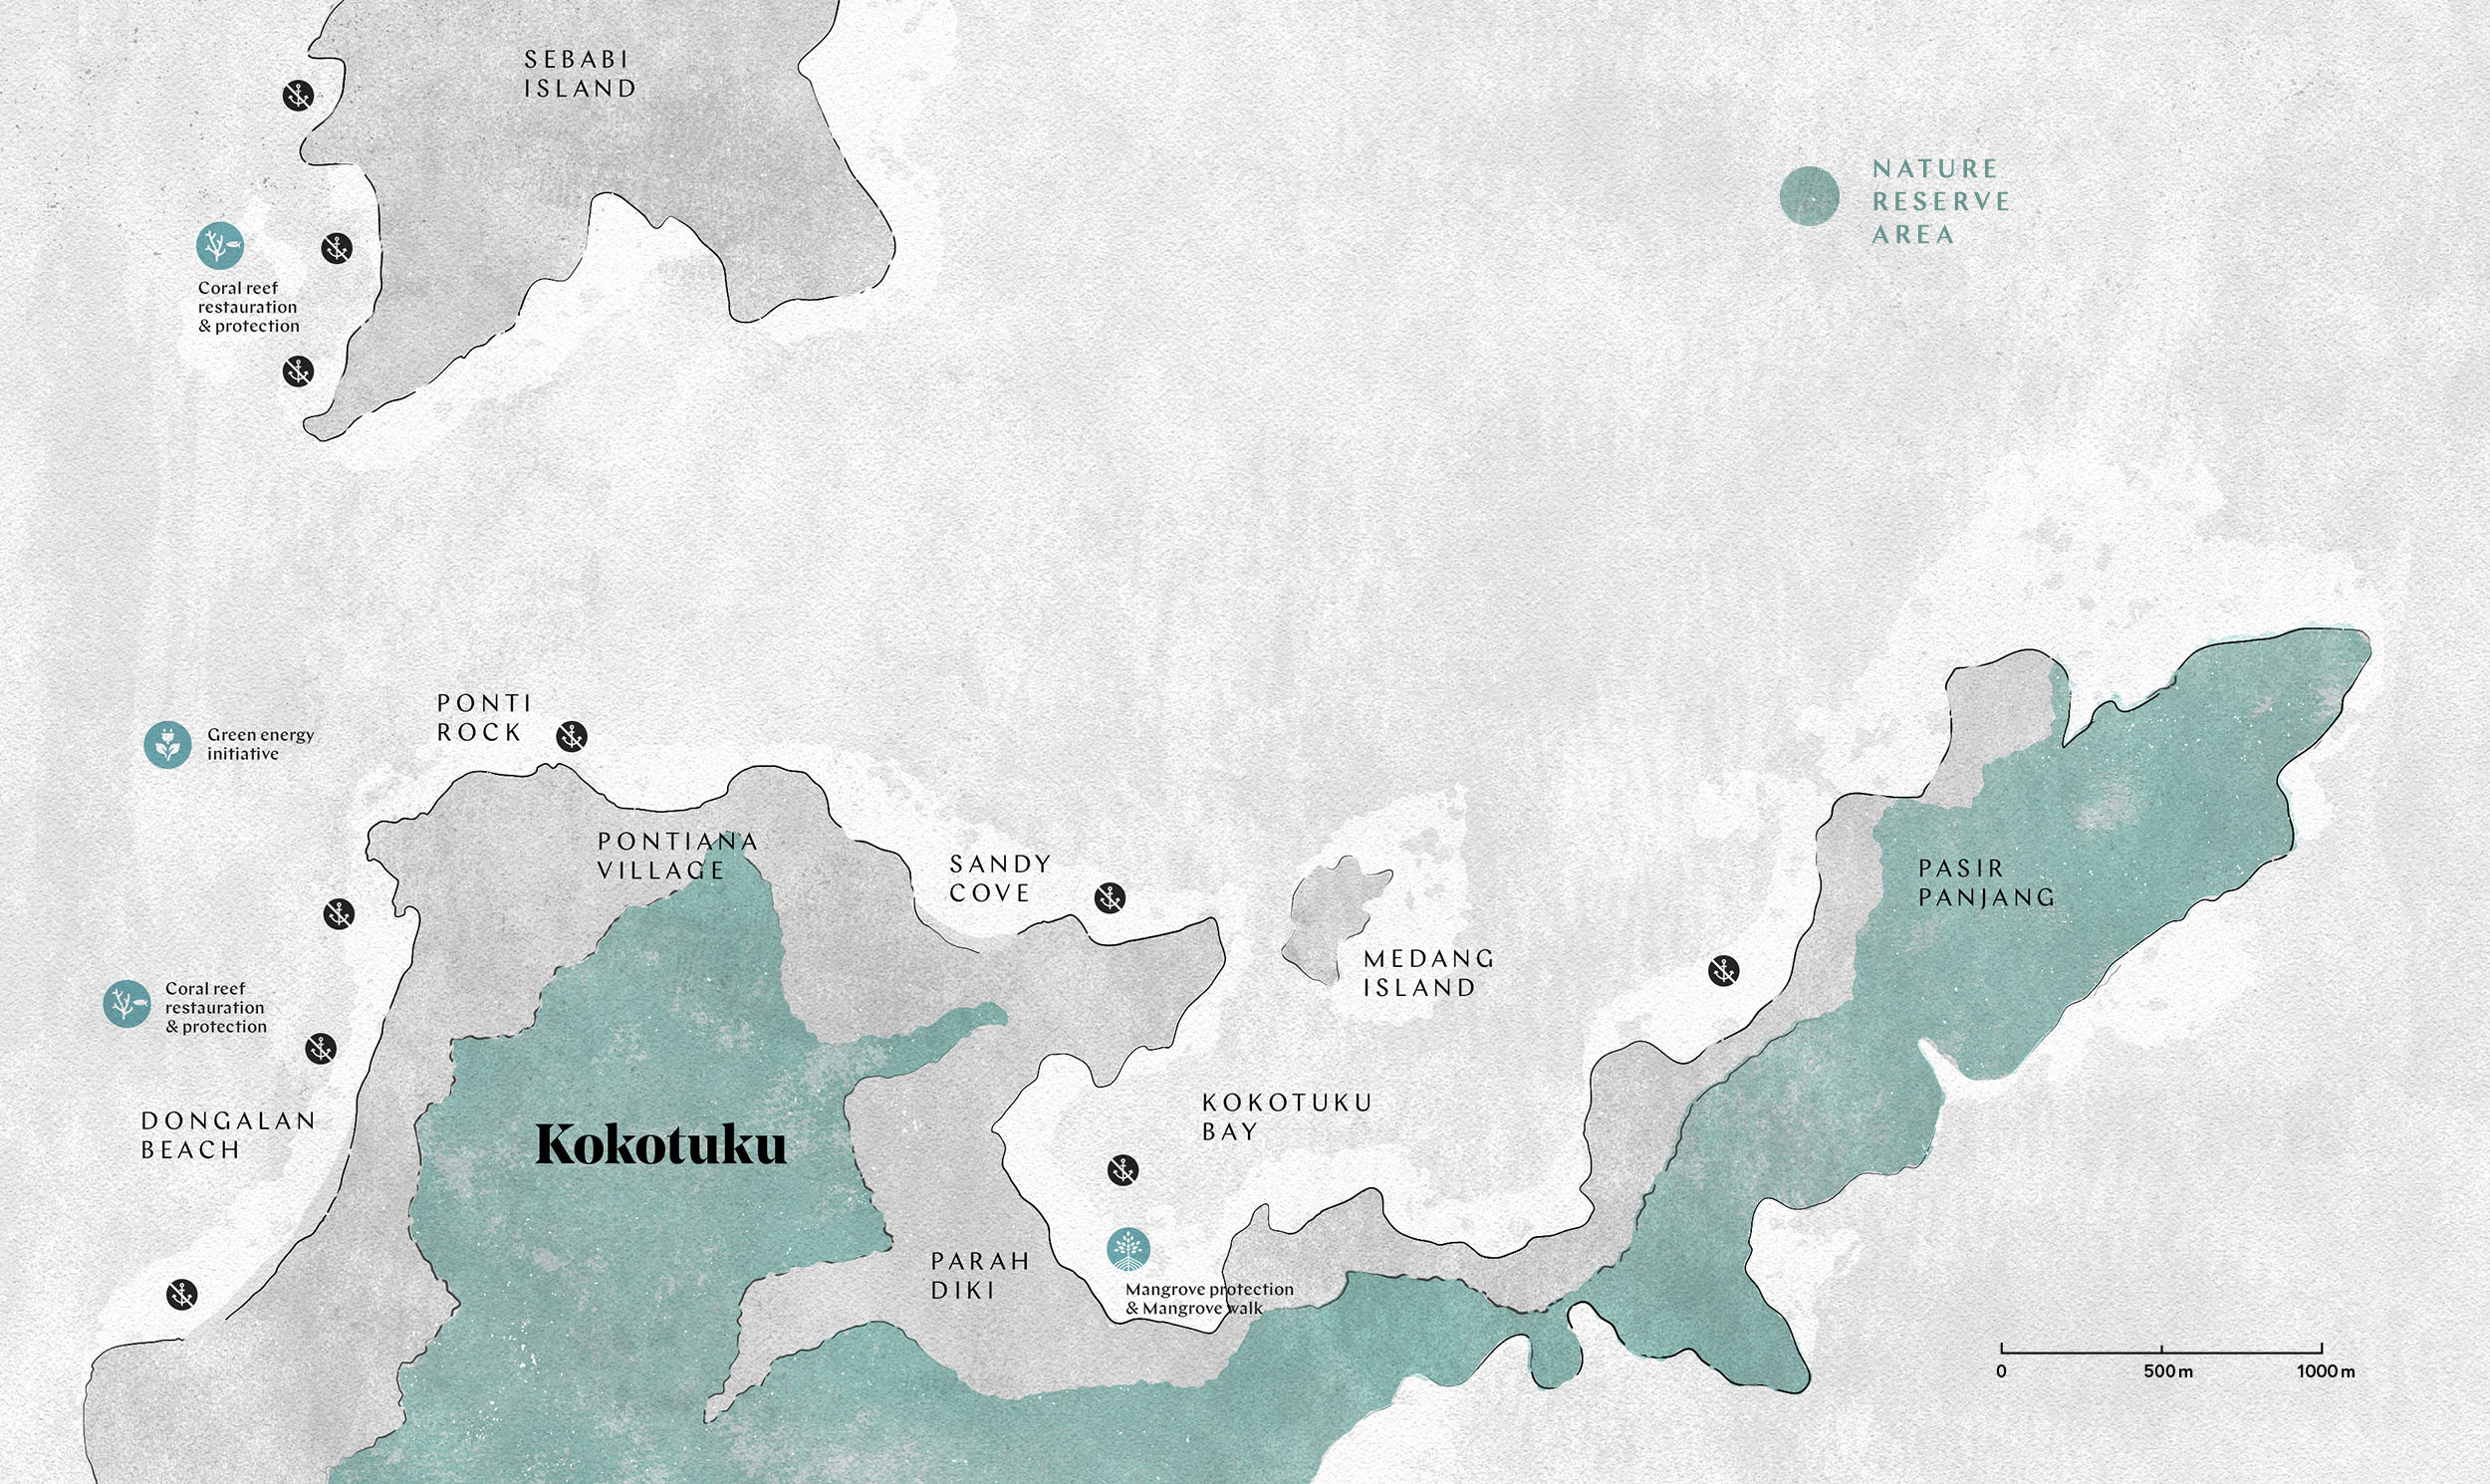 4_Kokotuku_Nature_Reserve_Area_scale.jpg